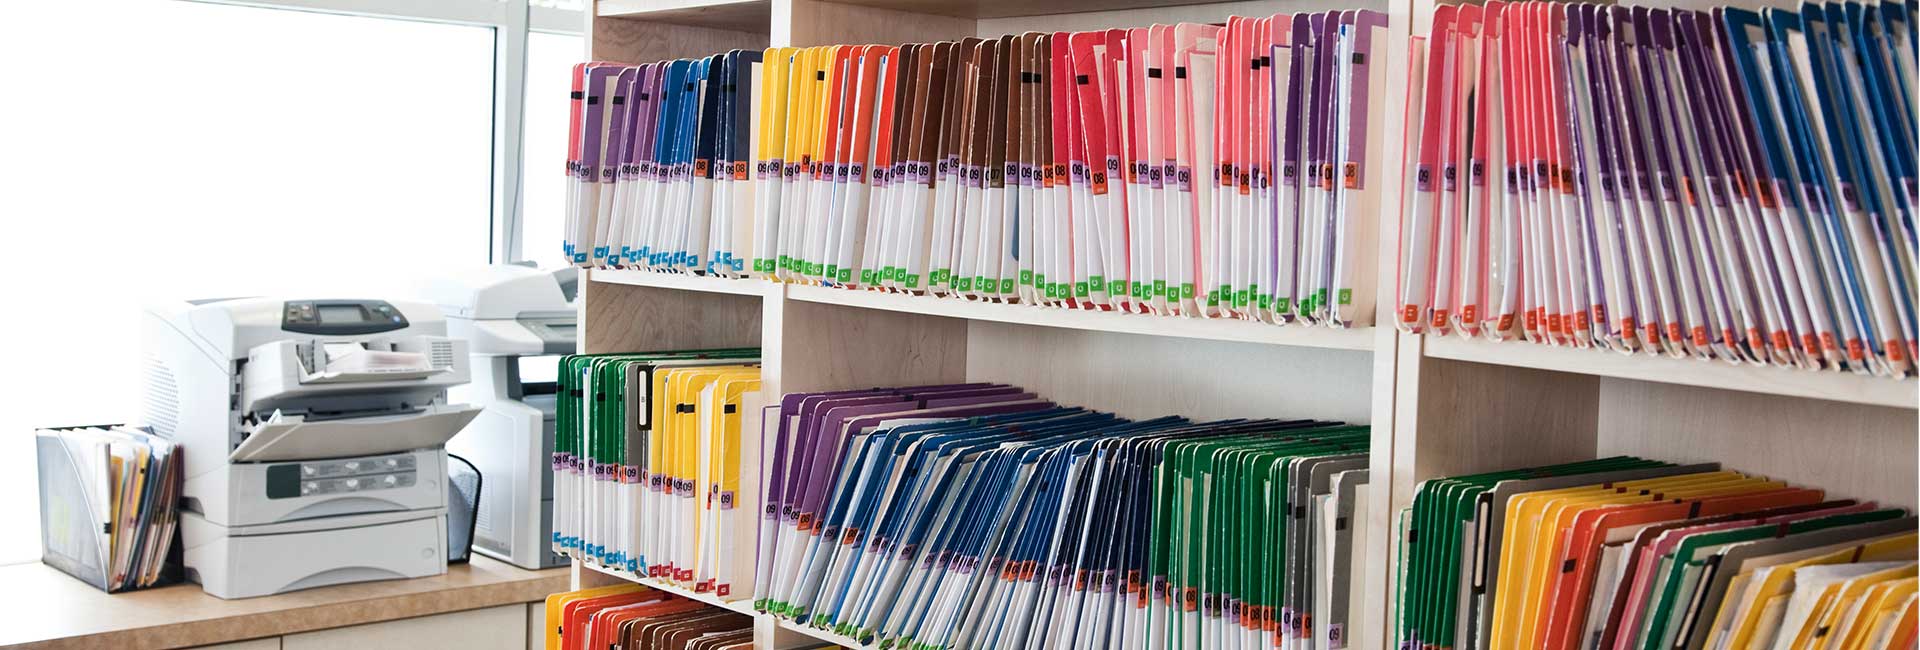 Custom folders keep these medical files organized